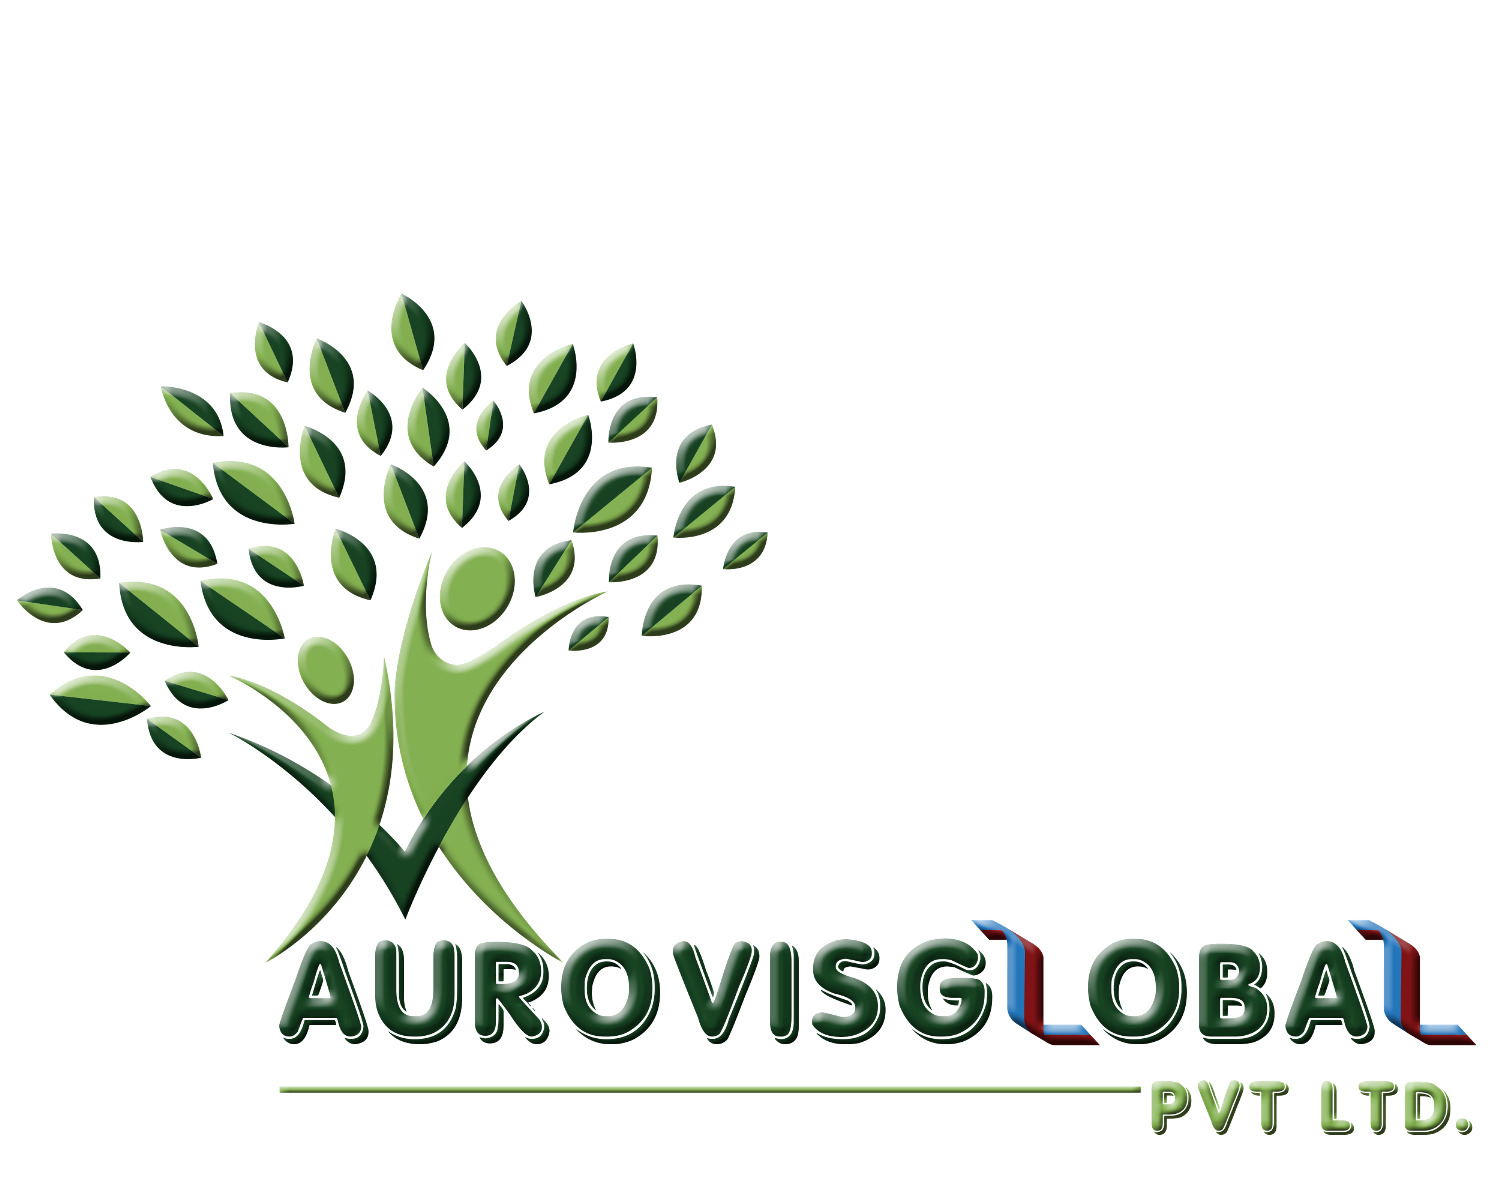 Aurovisglobal Private Limited